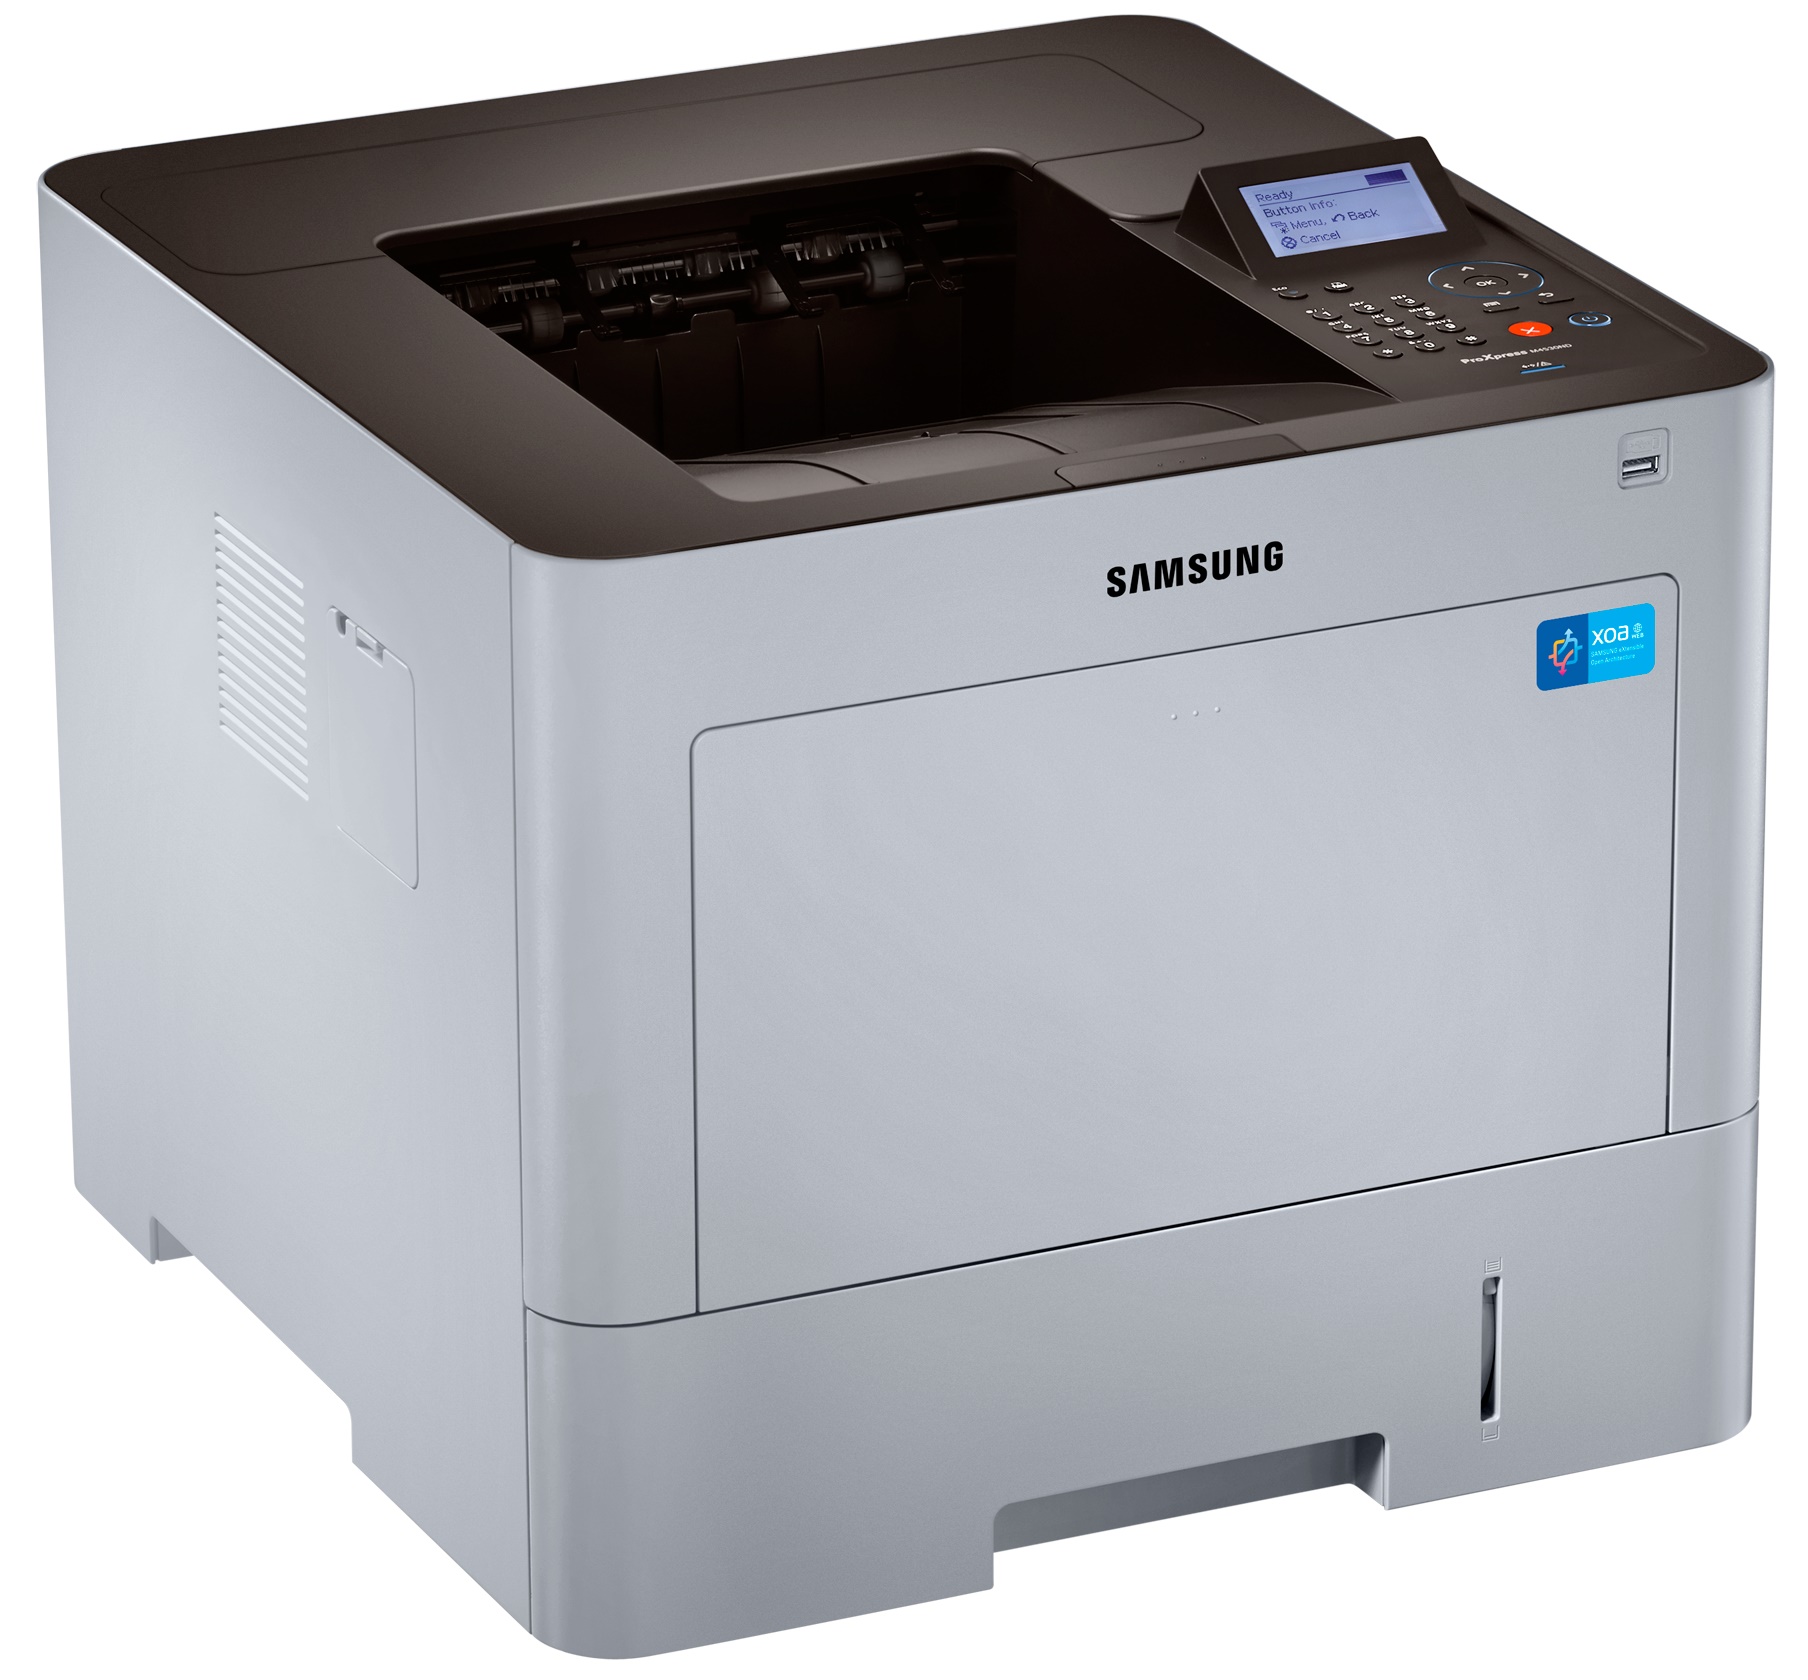 Ремонт принтера самсунг цена. Samsung PROXPRESS m4020nd. Принтер Samsung PROXPRESS m3825nd. Samsung SL-m4020nd. Samsung PROXPRESS m4020nd, ч/б, a4.